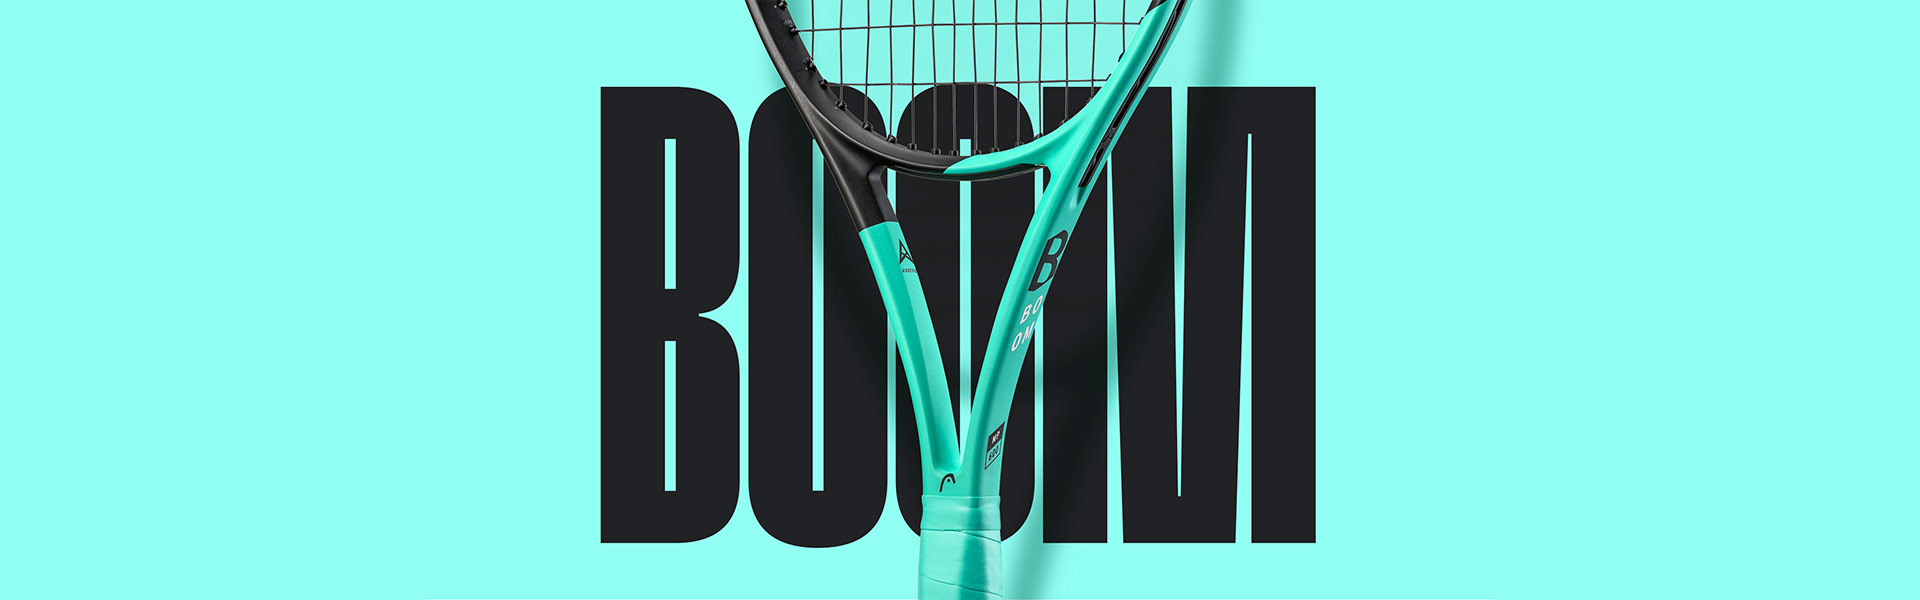 New BOOM tennis racquet series from HEAD